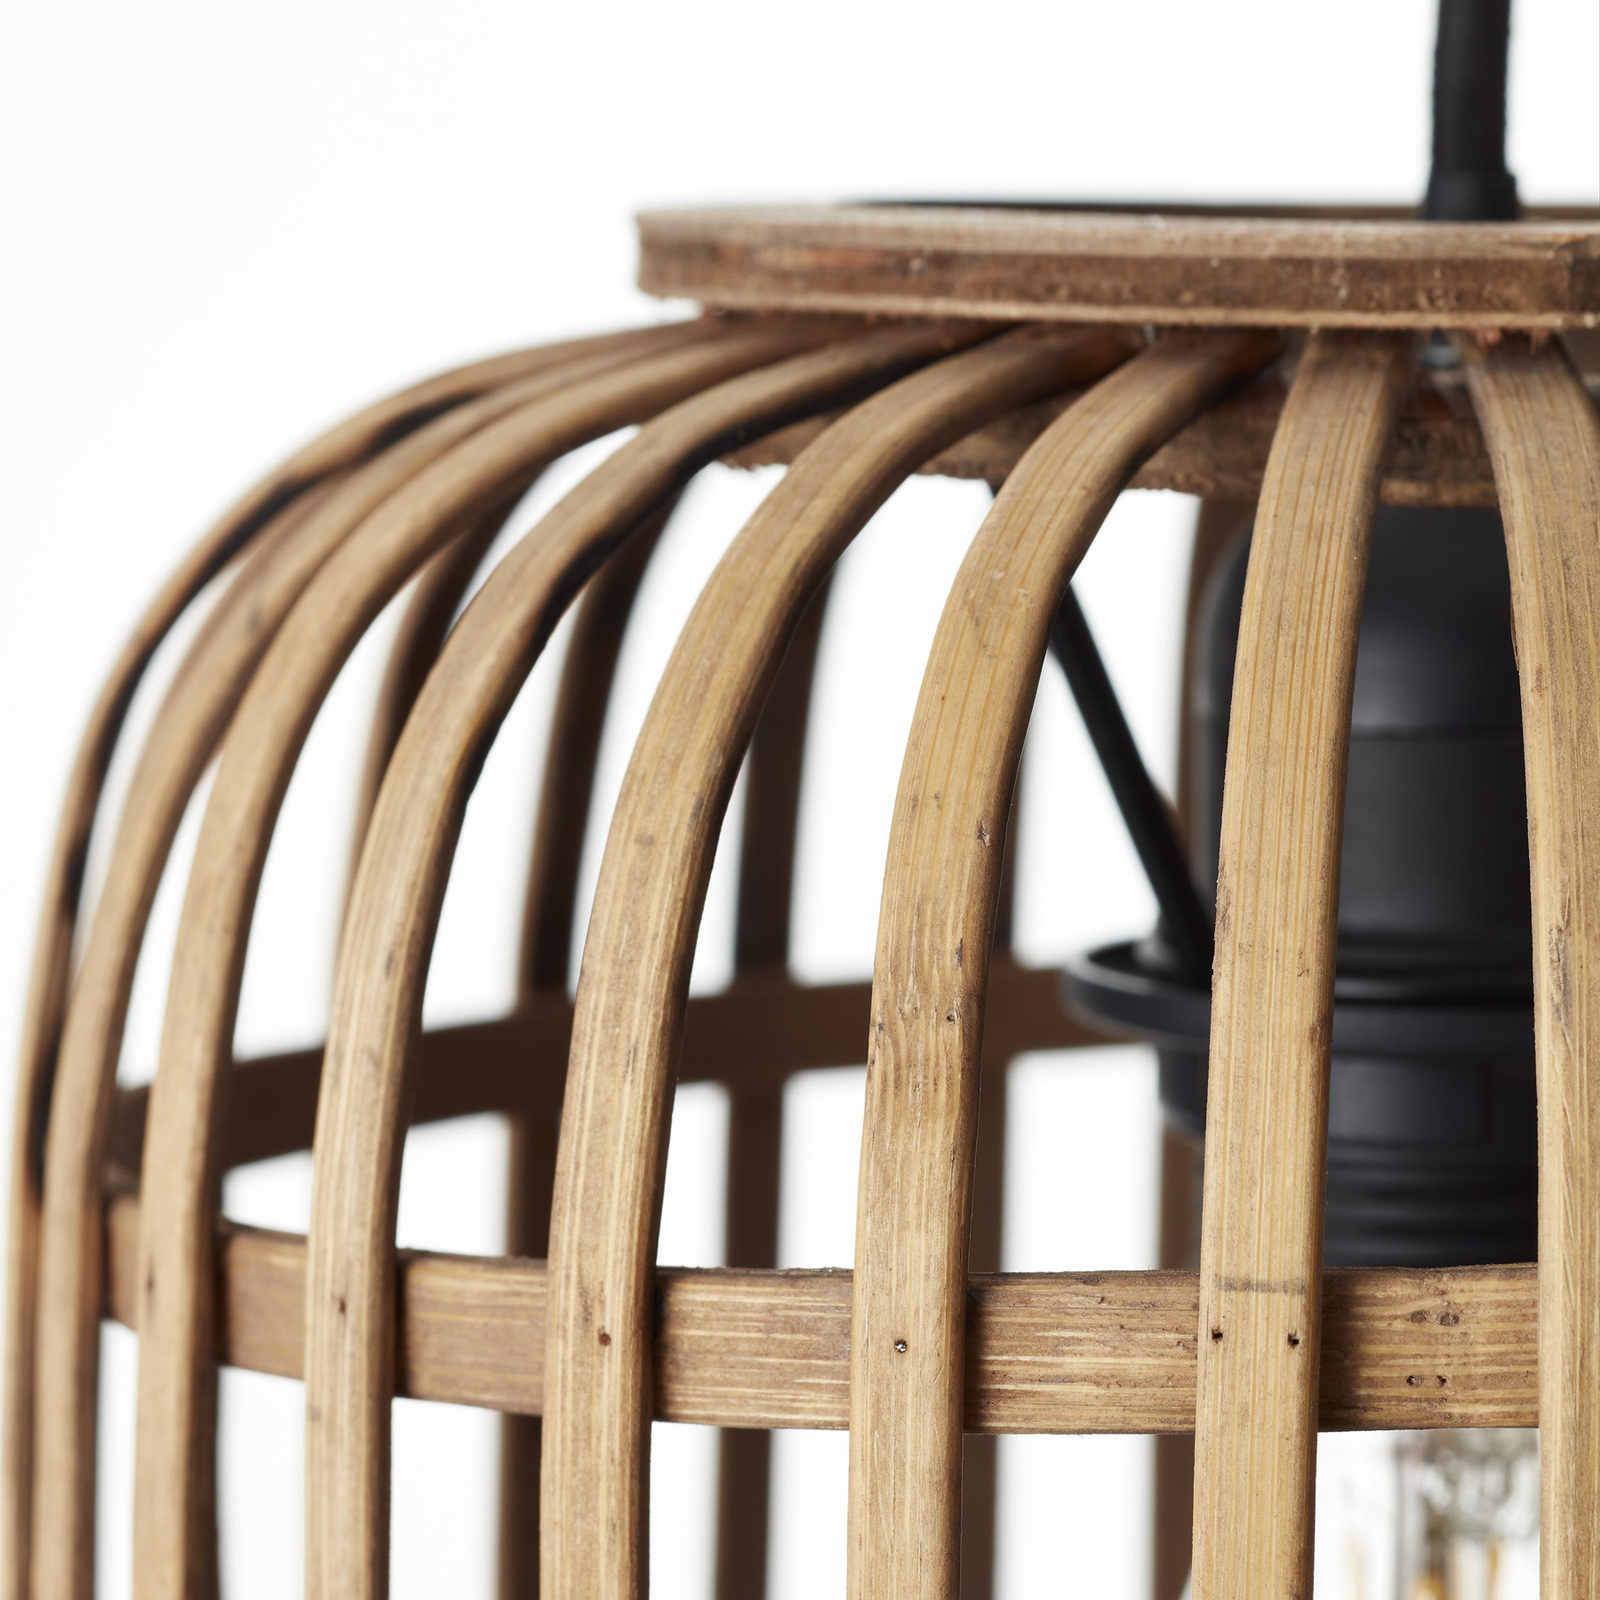 Woodrow hanglamp, Ø 21,5 cm, licht hout, bamboe/metaal